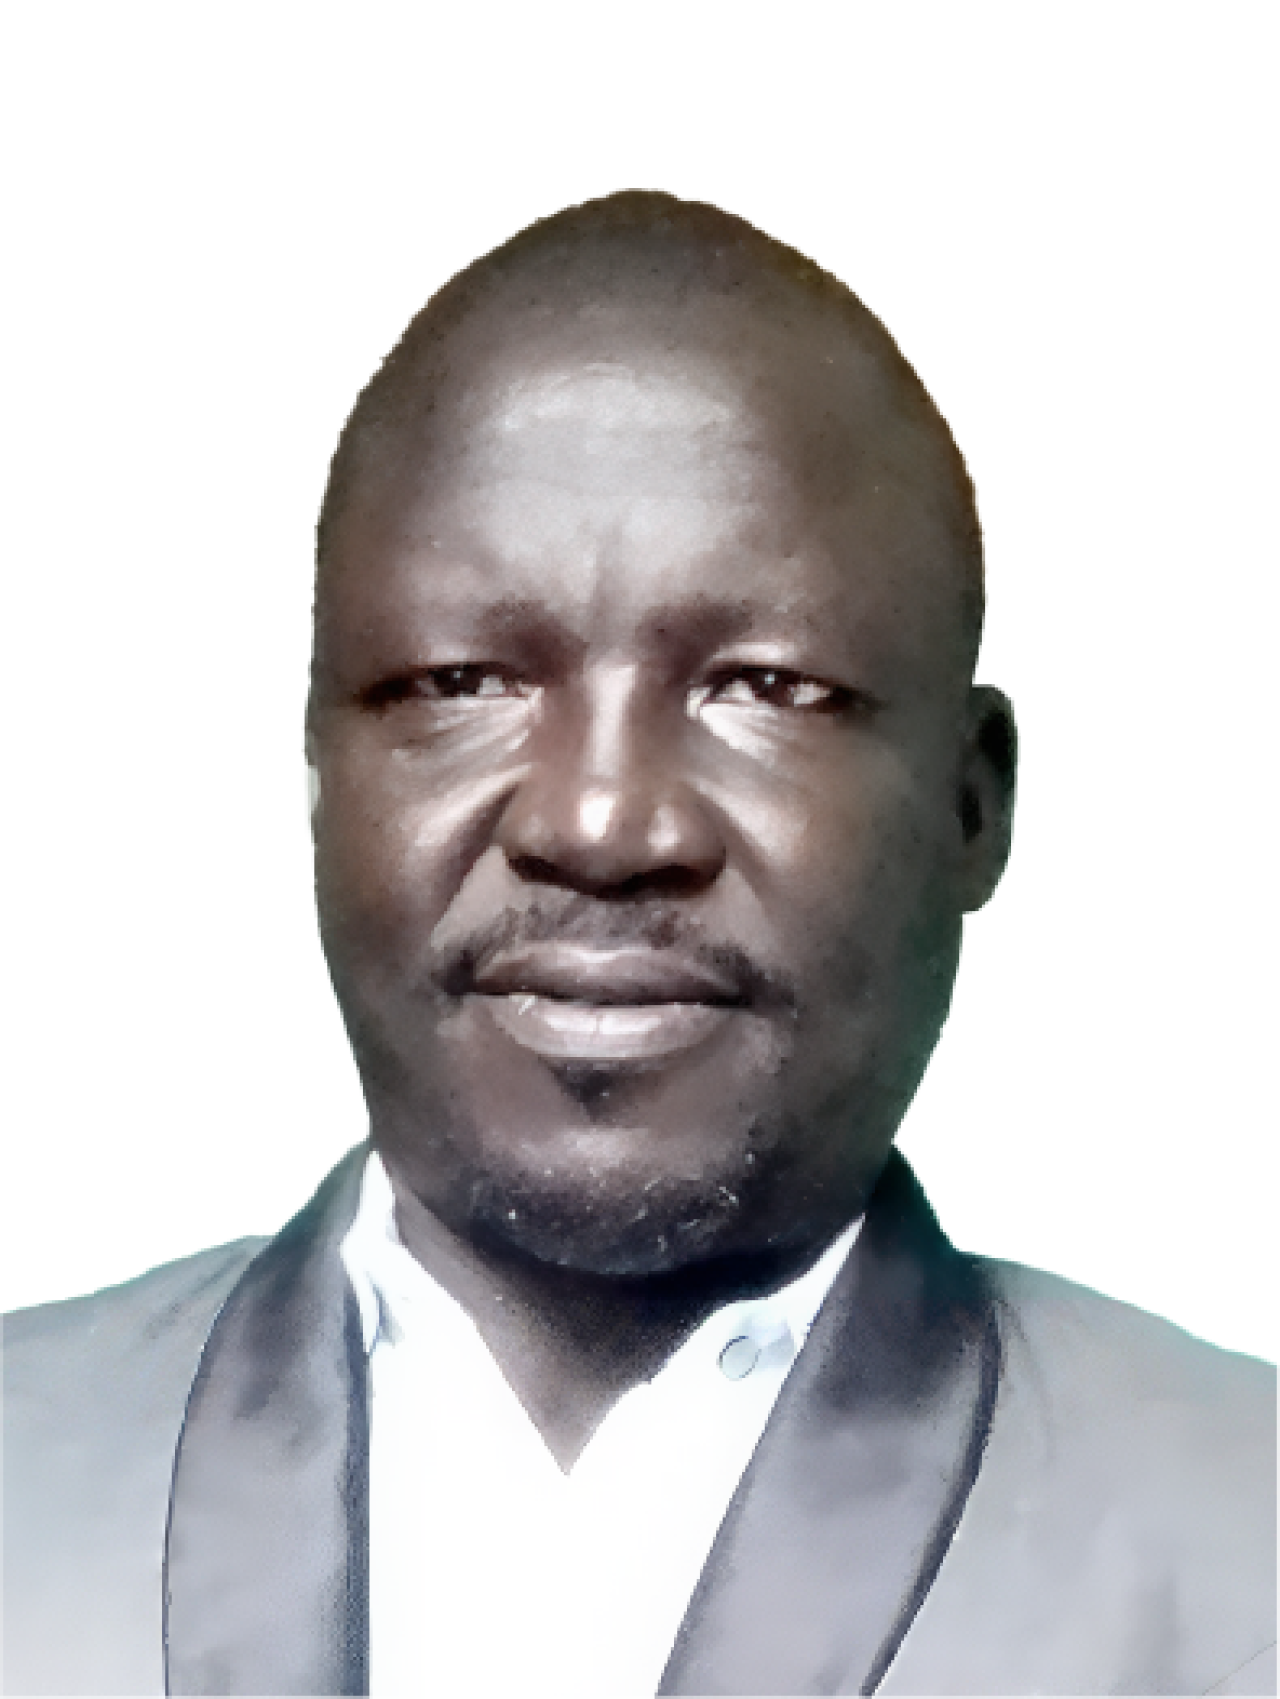 Francis Okot
Research Coordinator, South Sudan
Francis is a Research Coordinat...